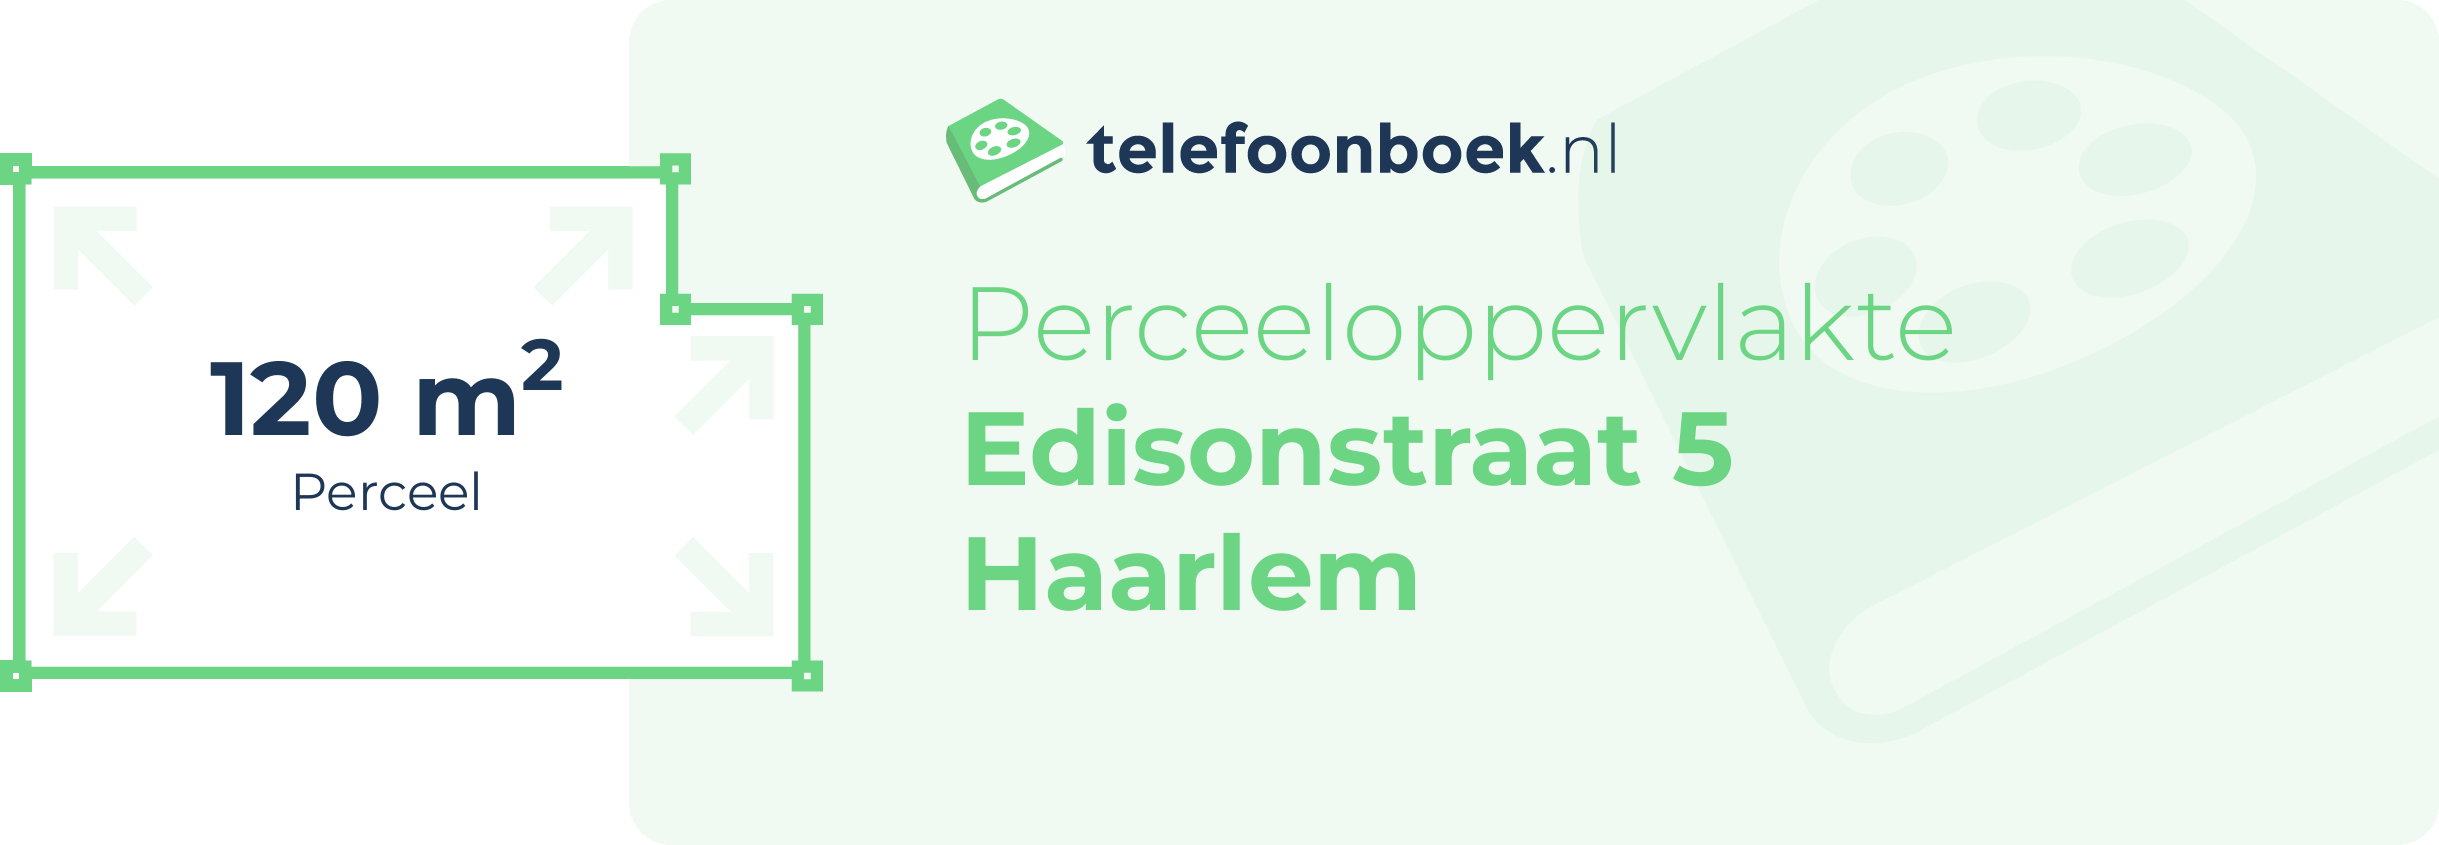 Perceeloppervlakte Edisonstraat 5 Haarlem